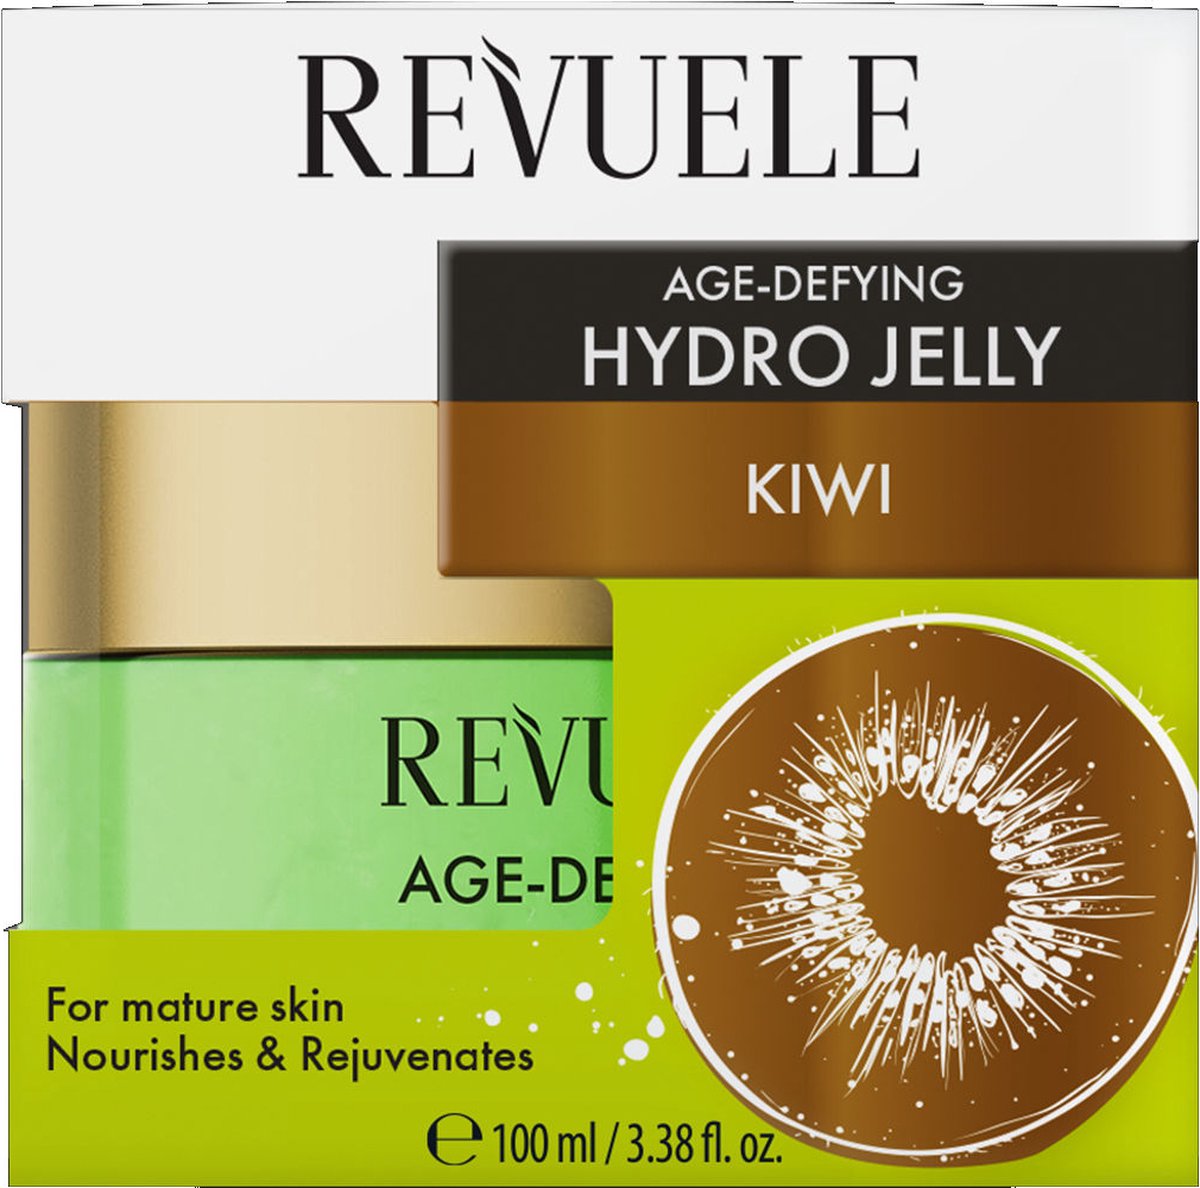 Revuele Age-Defying Hydro Jelly Kiwi